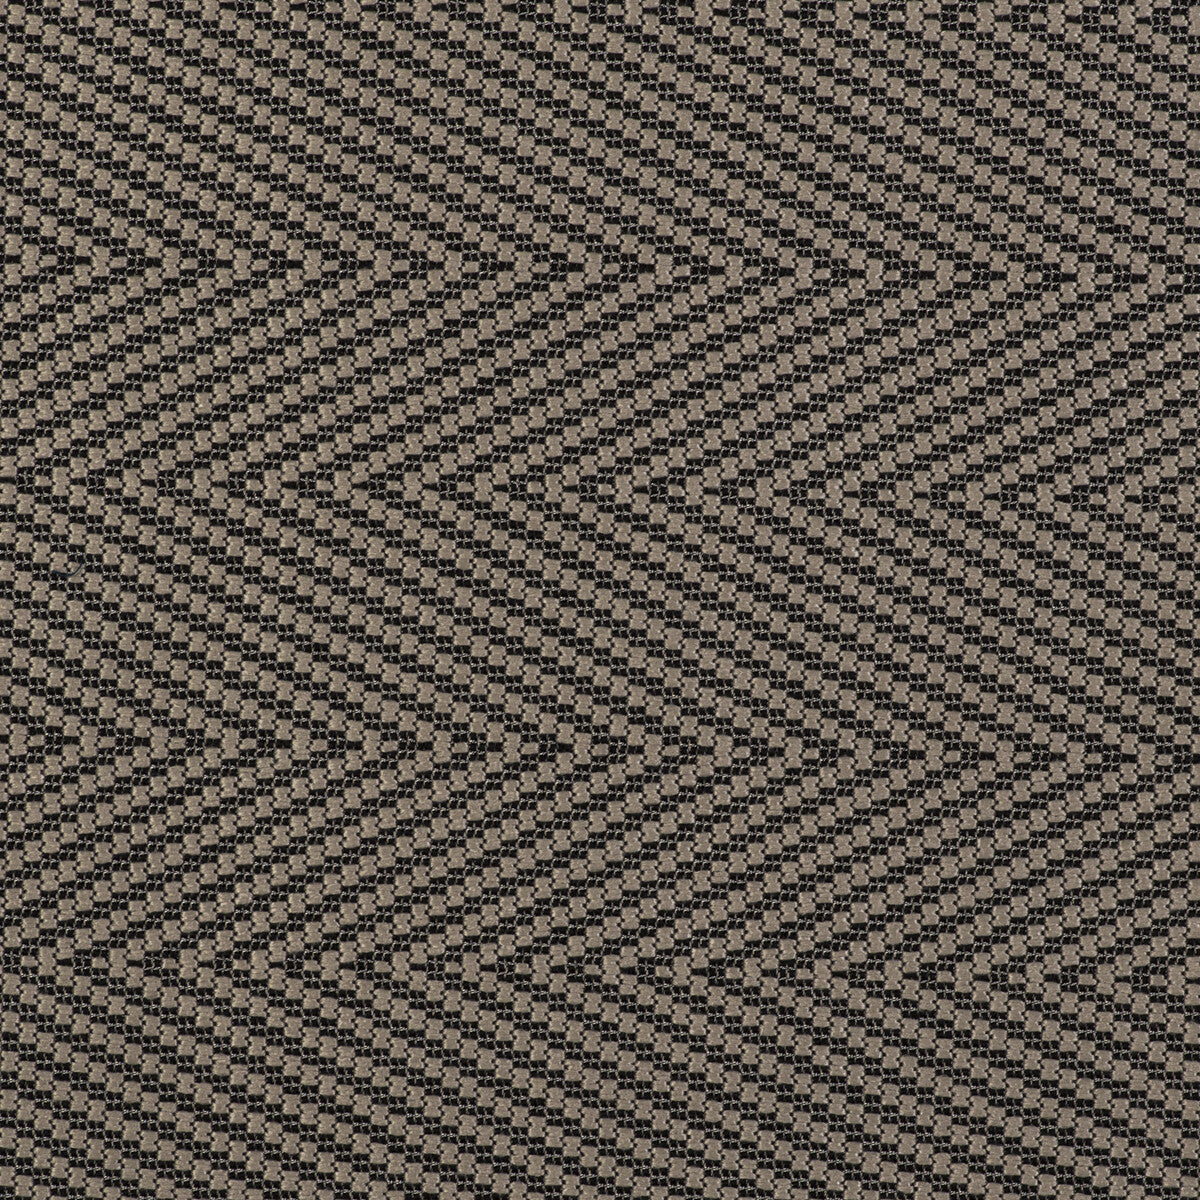 Gran Espiga fabric in lino/negro color - pattern GDT5507.004.0 - by Gaston y Daniela in the Gaston Libreria collection